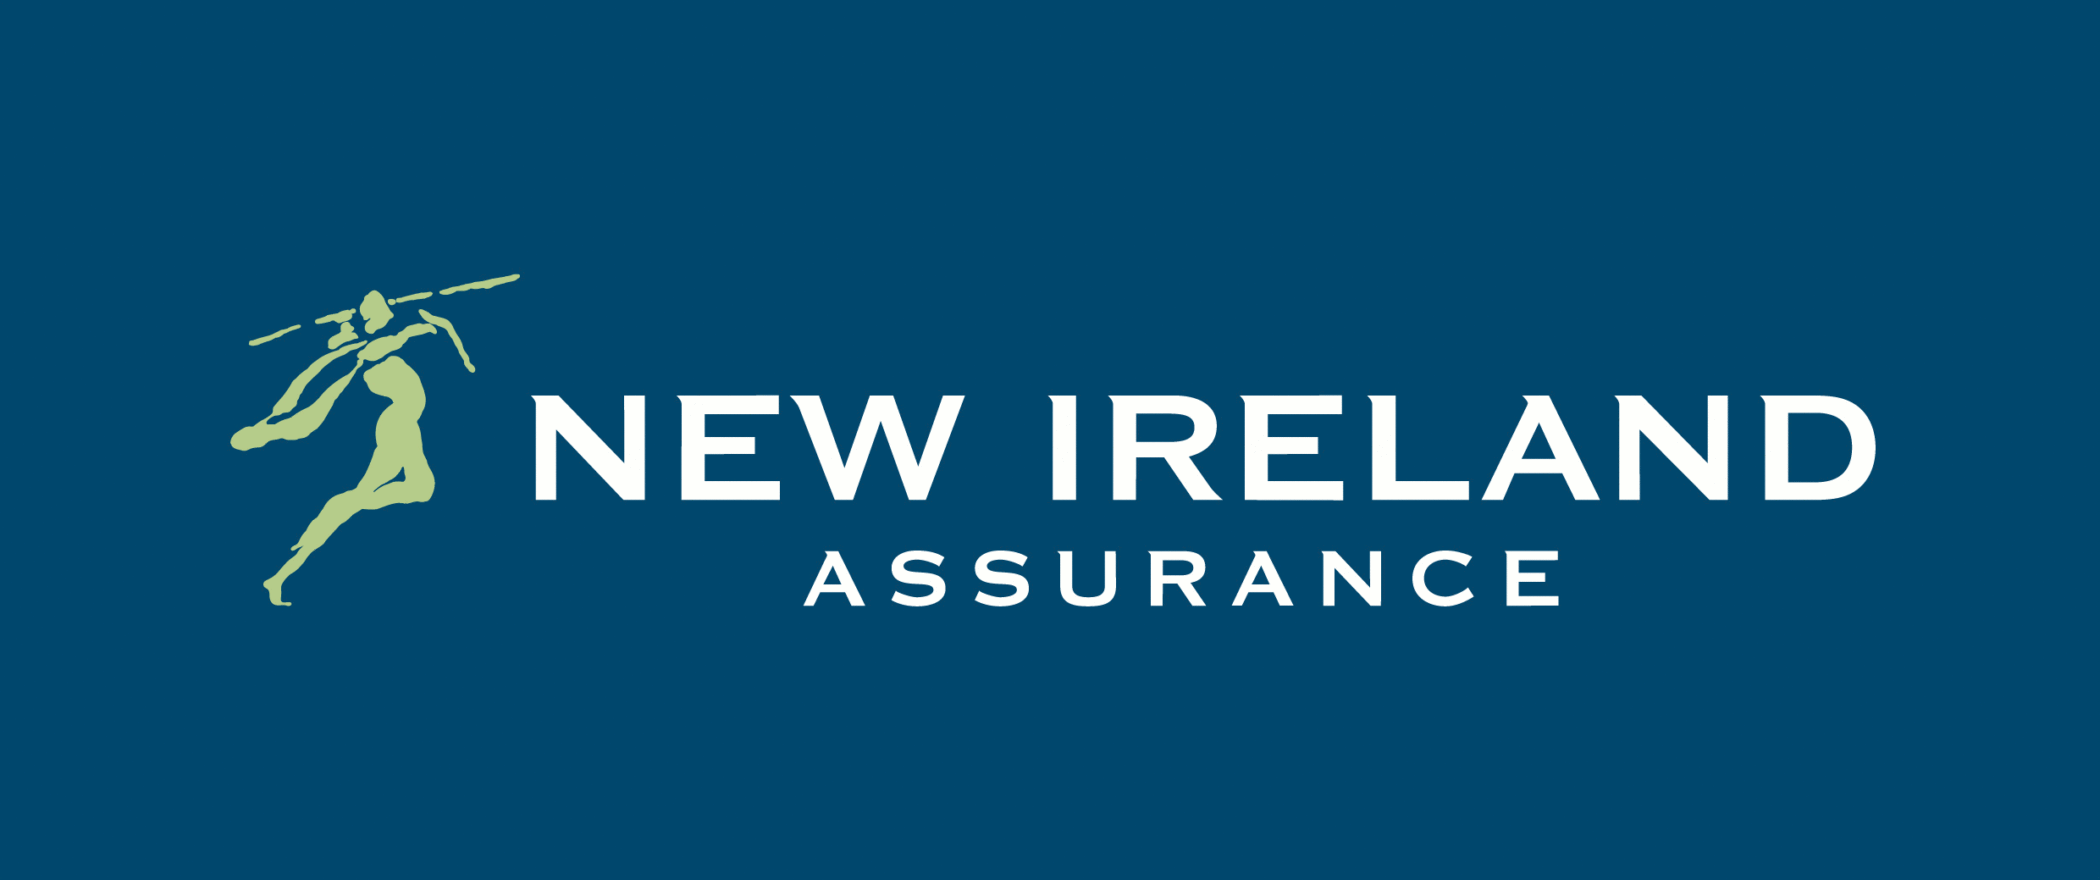 New Ireland Assurance Company plc